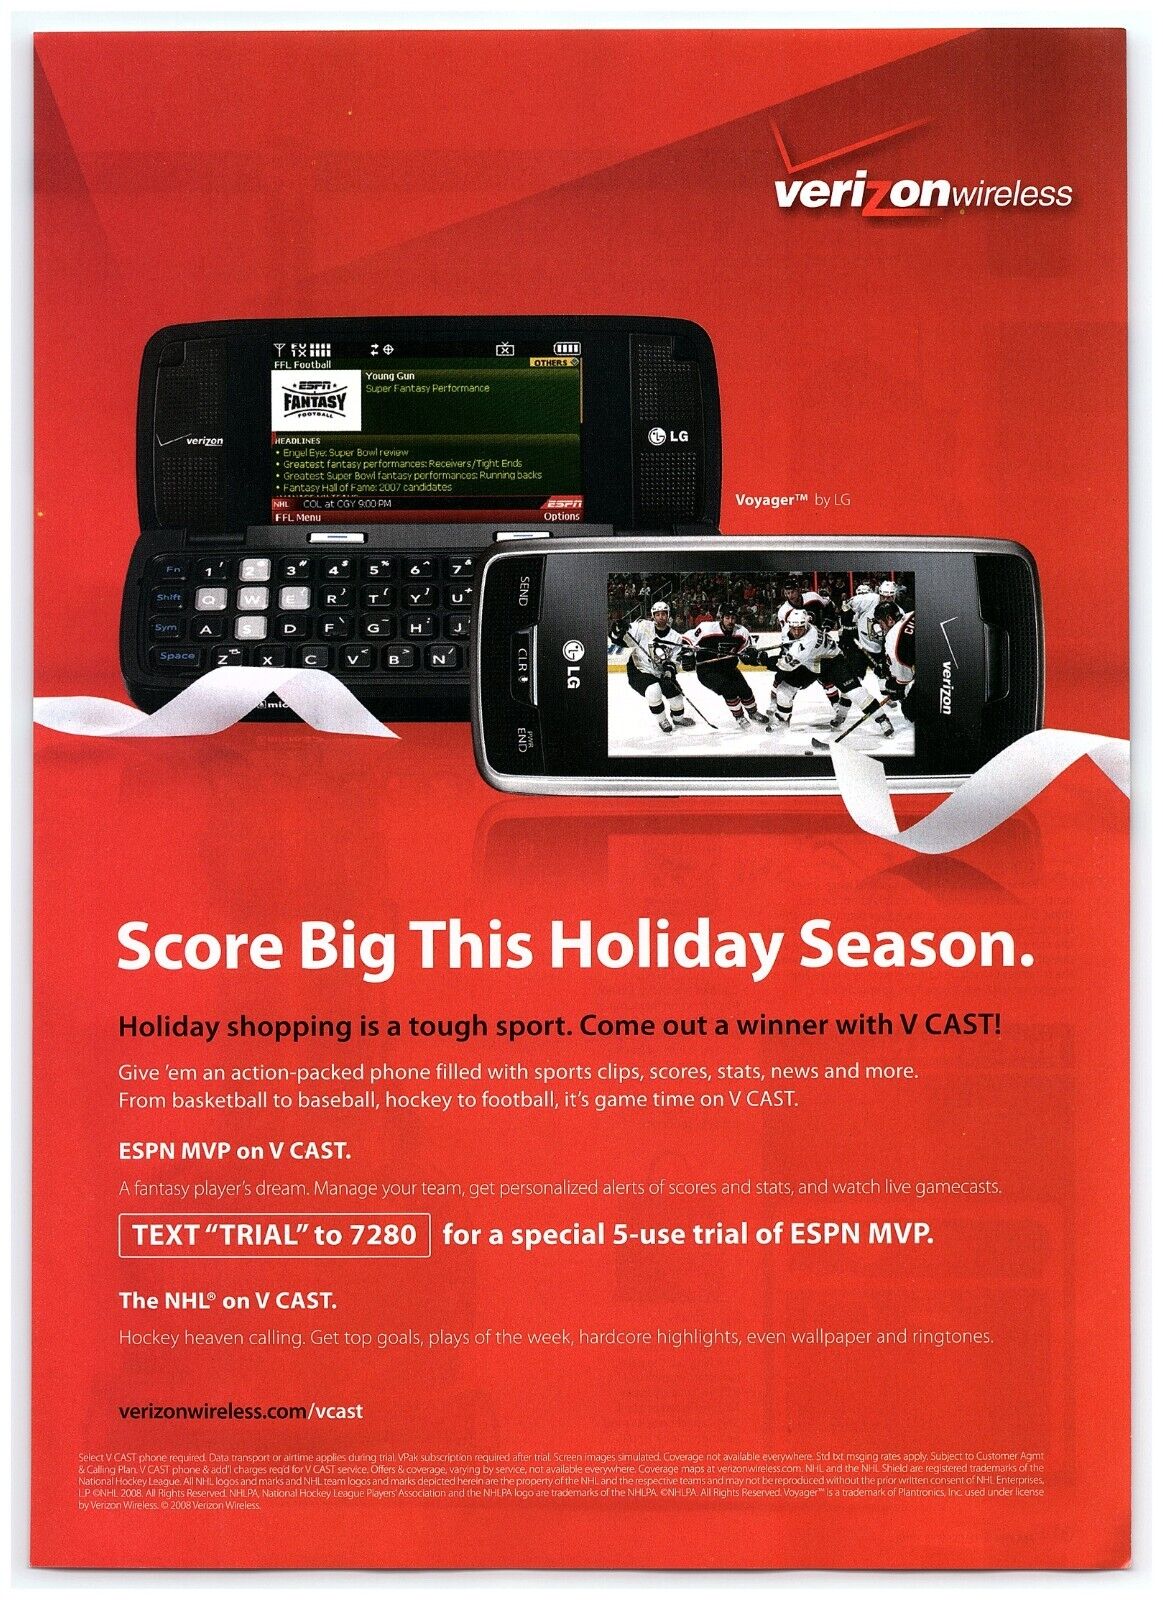 2008 Verizon Wireless Print Ad, LG Voyager Phone Score Big Hockey Fantasy ESPN